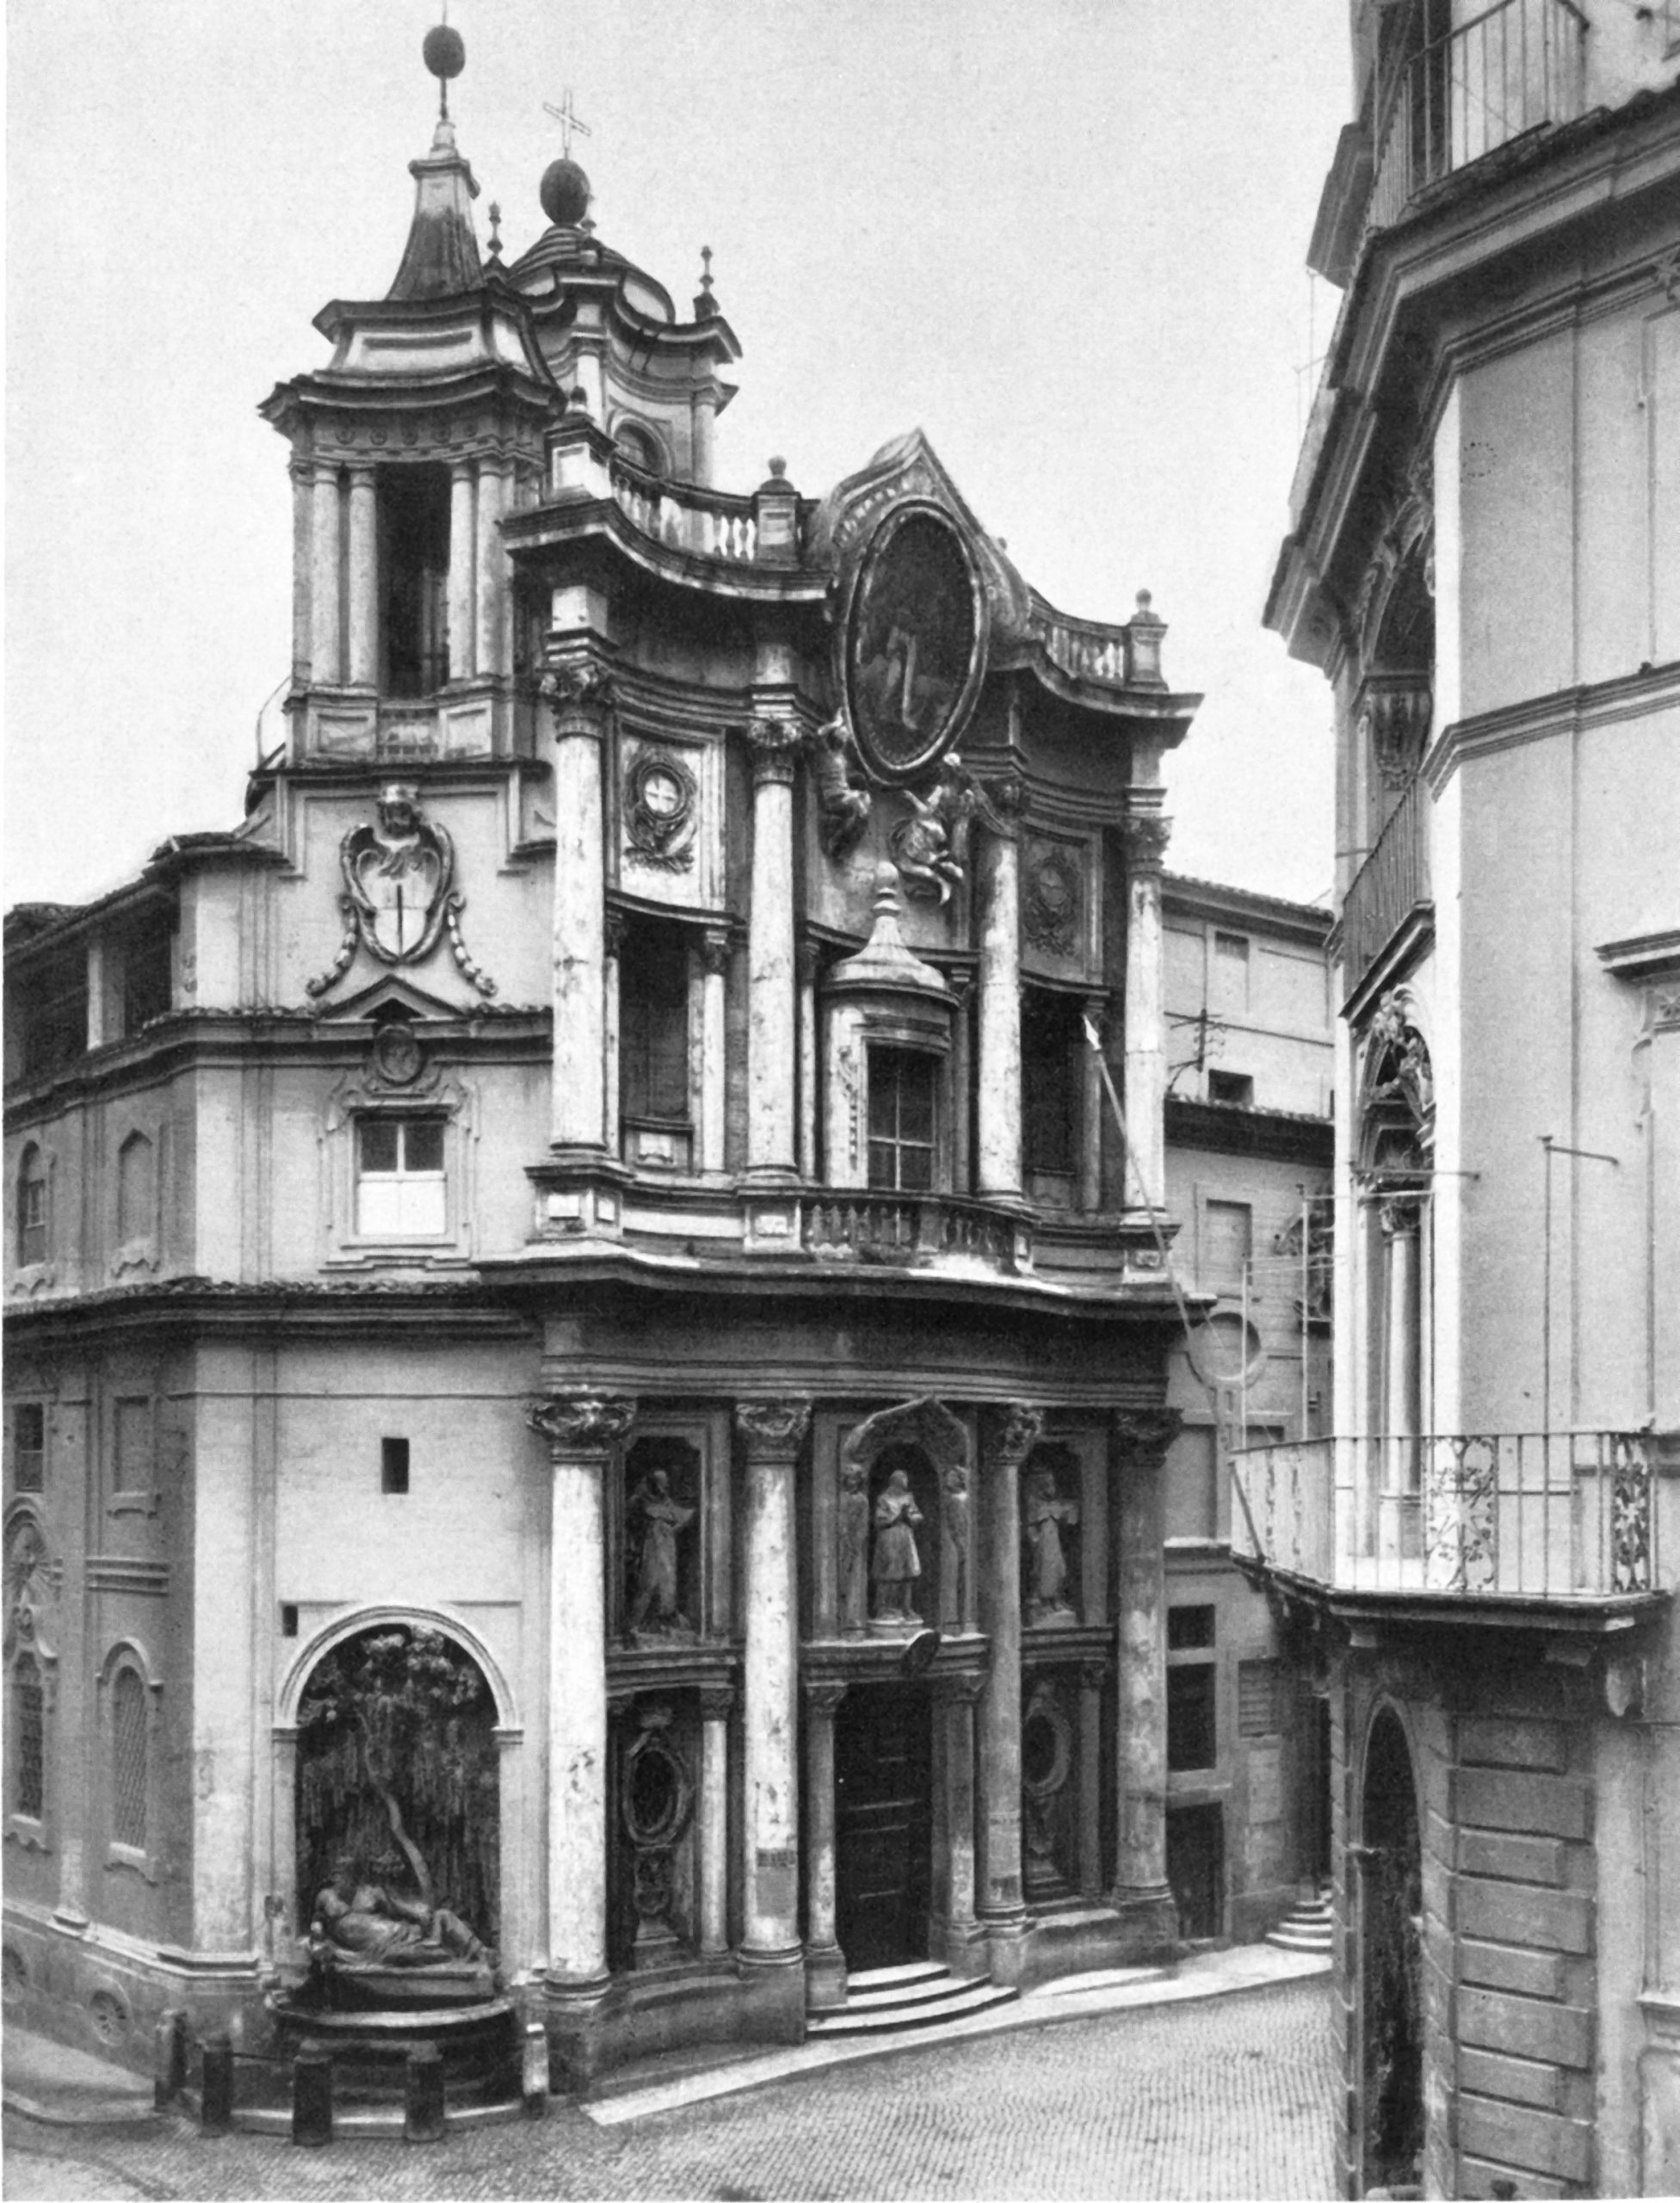 Francesco Borromini, kostel S. Carlo alle Quatro Fontane, Řím, 1634–1667. Foto: Fratelli Alinari S. A., Florencie, zdroj: G. Delogu: Italienische Baukunst, Fretz & Wasmuth, 1946